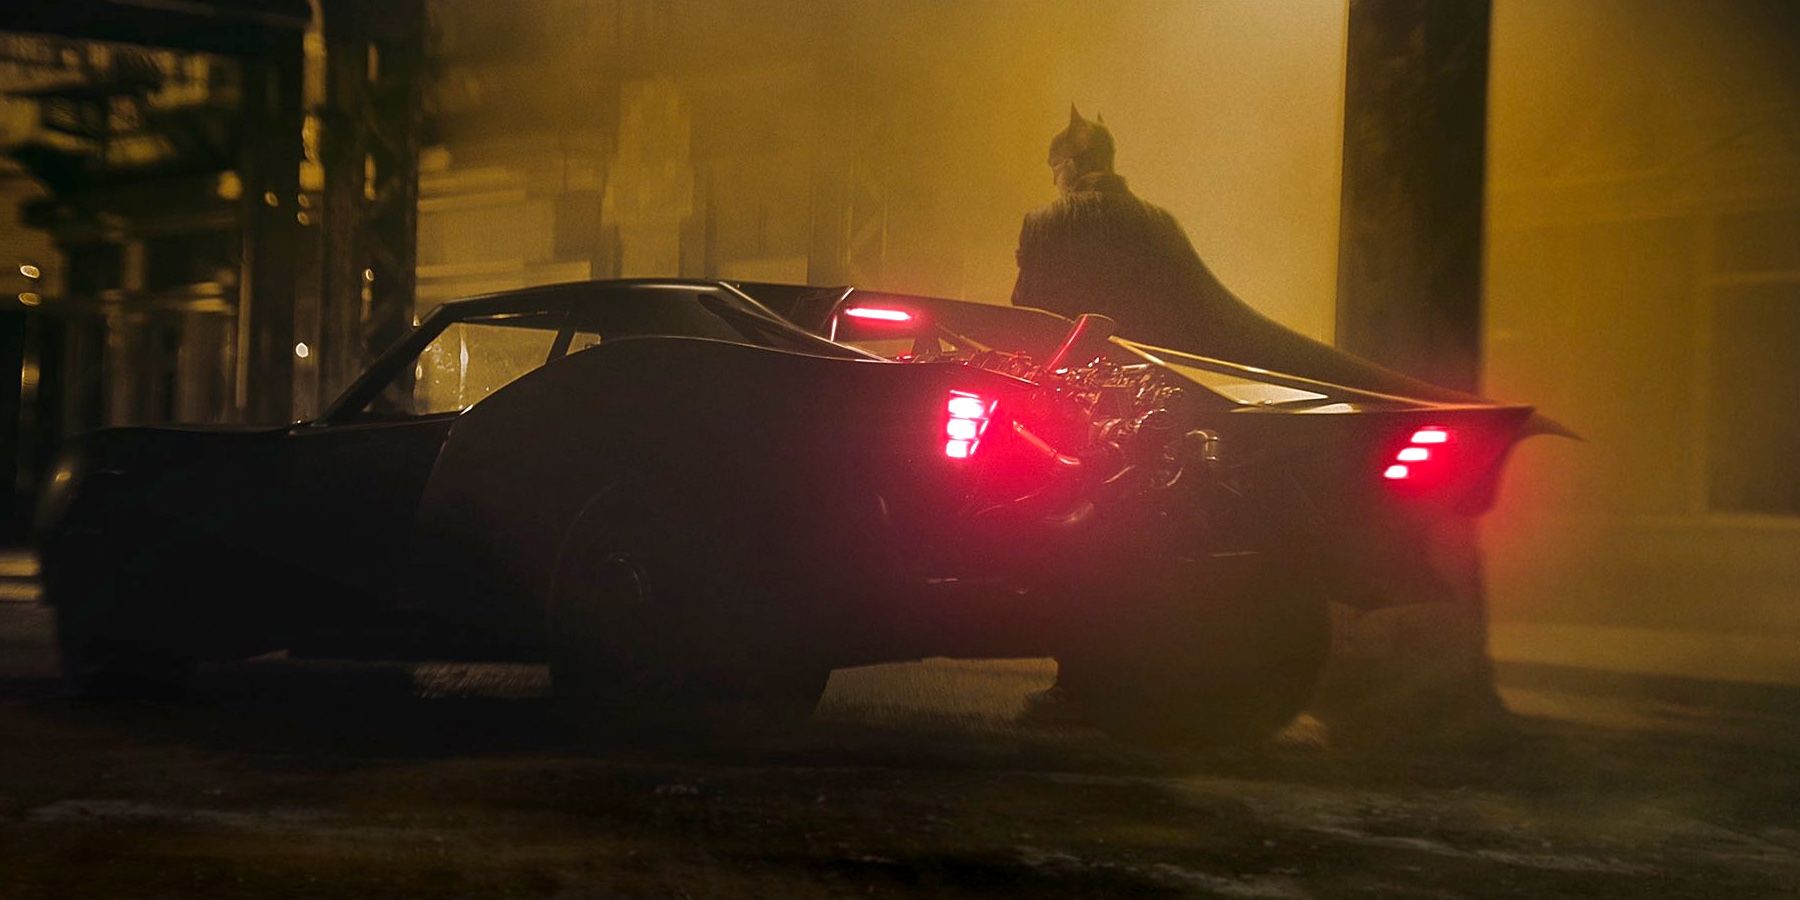 El póster de Batman muestra de cerca el batimóvil de Pattinson